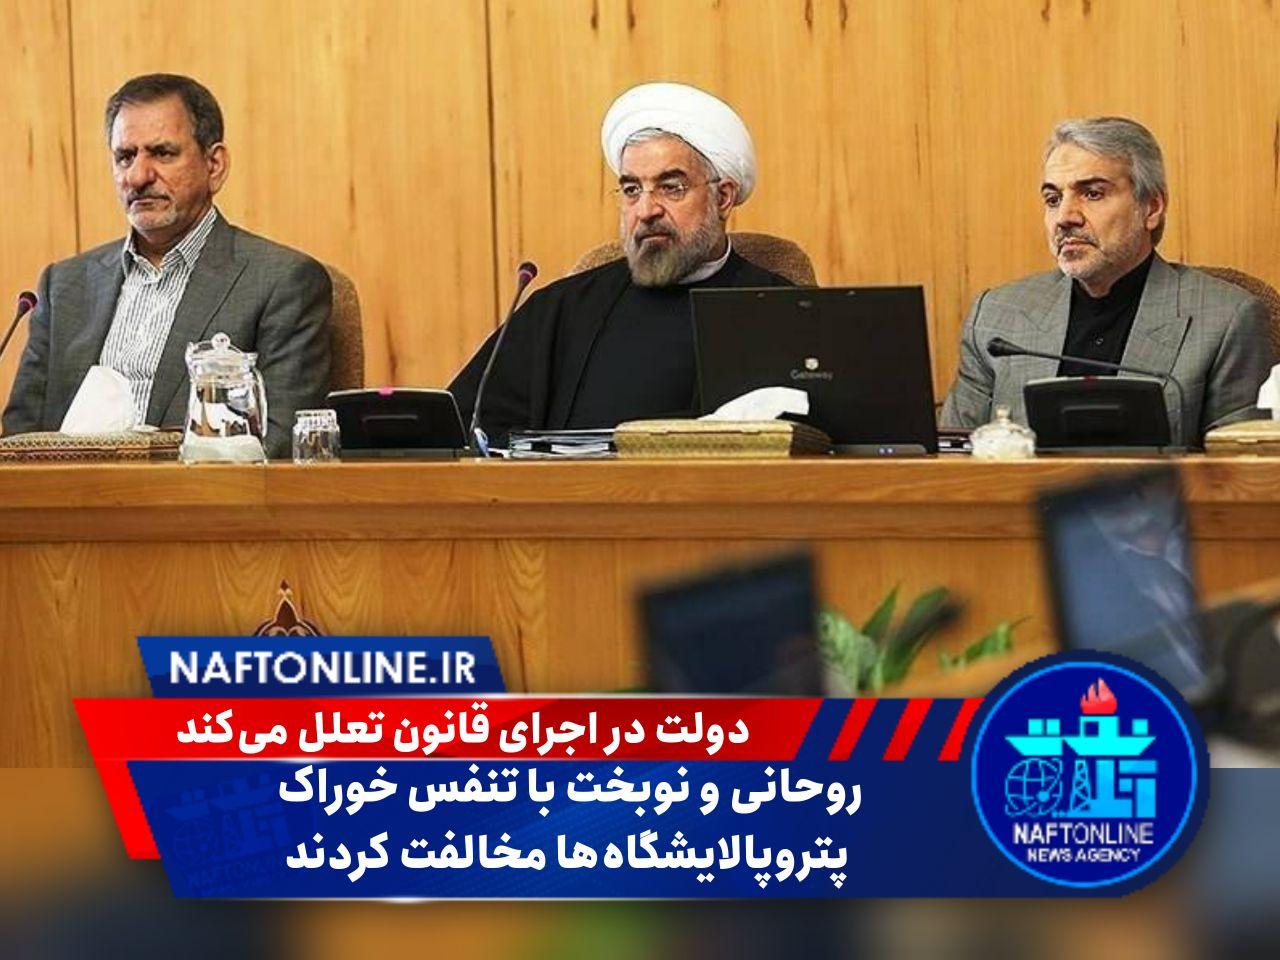 حسن روحانی | محمد باقر نوبخت | نفت آنلاین